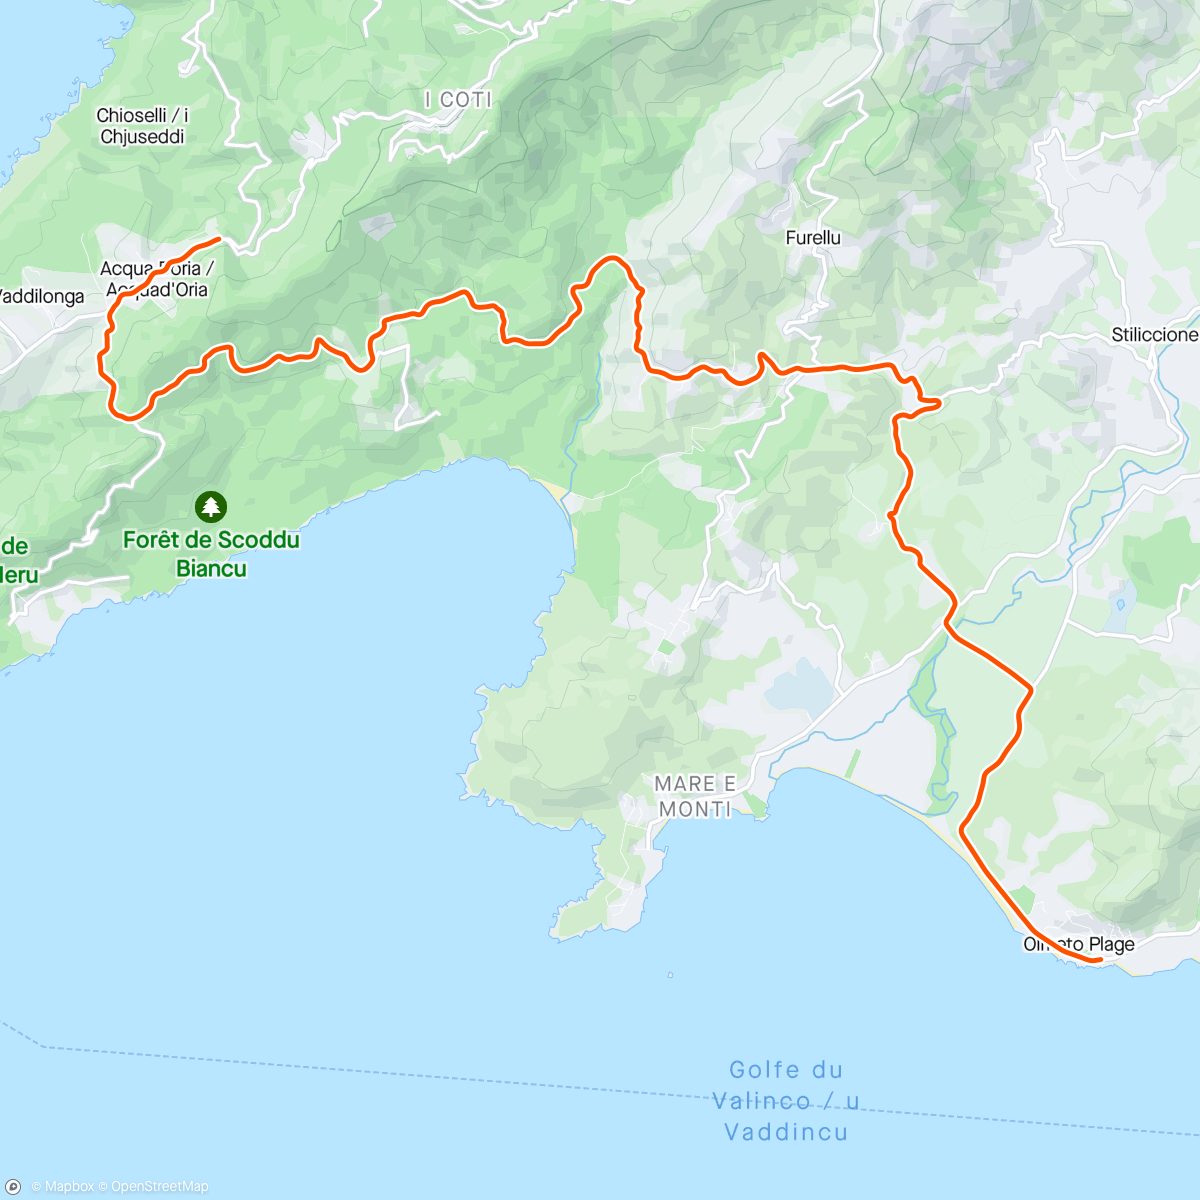 Map of the activity, Kinomap - ☀️🌿Corsica🦋🍃 Acqua Doria –⁠⁠⁠⁠⁠⁠ Marmuntagna –⁠⁠⁠⁠⁠⁠ Olmeto Plage